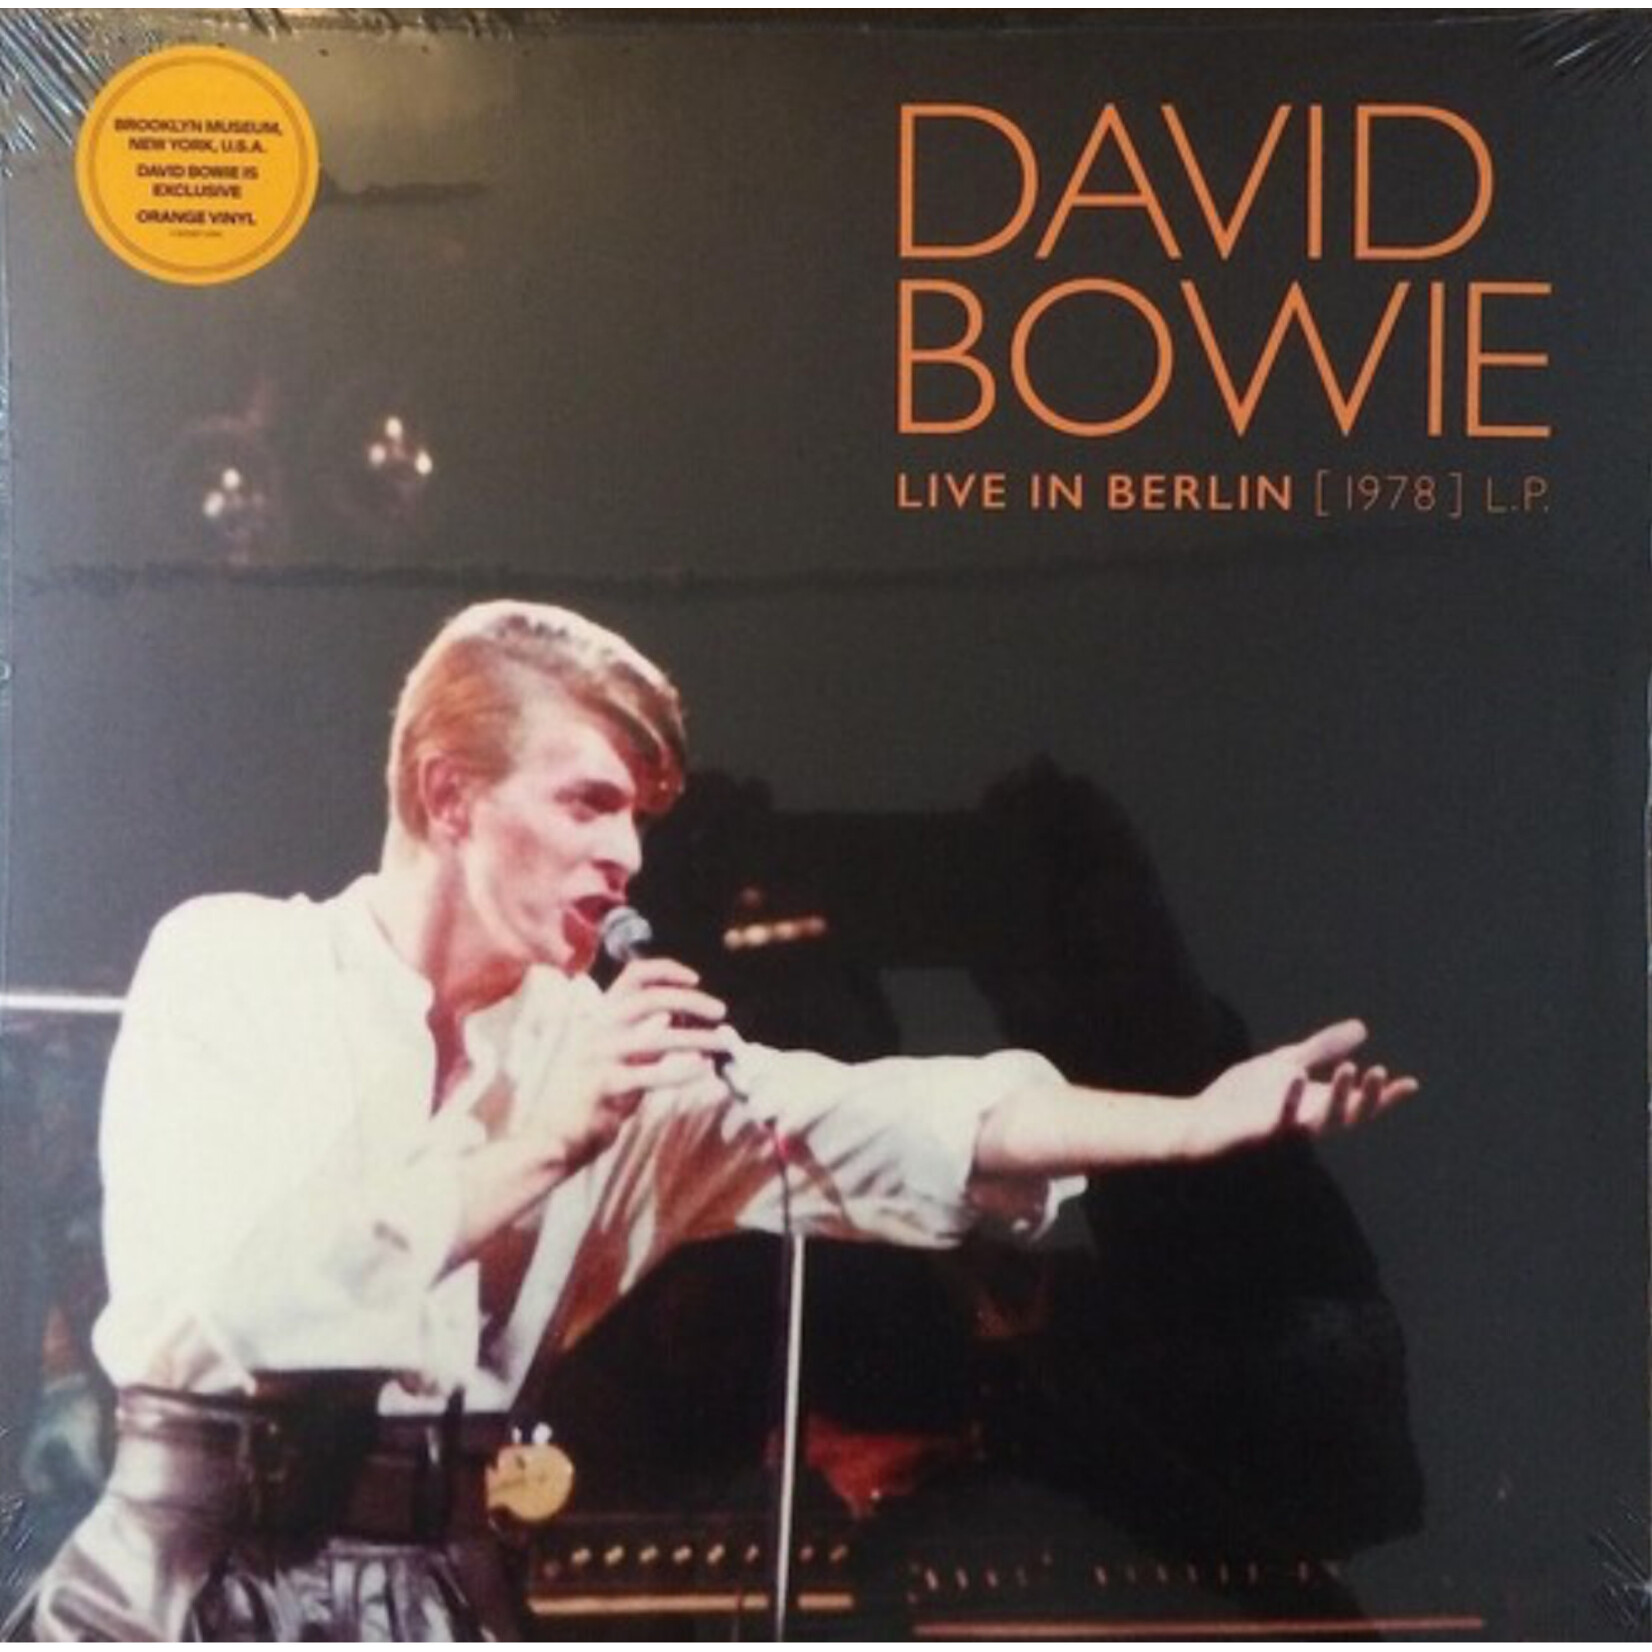 David Bowie - Live In Berlin [1978] - RPLH566862 - Vinyl LP (NEW)